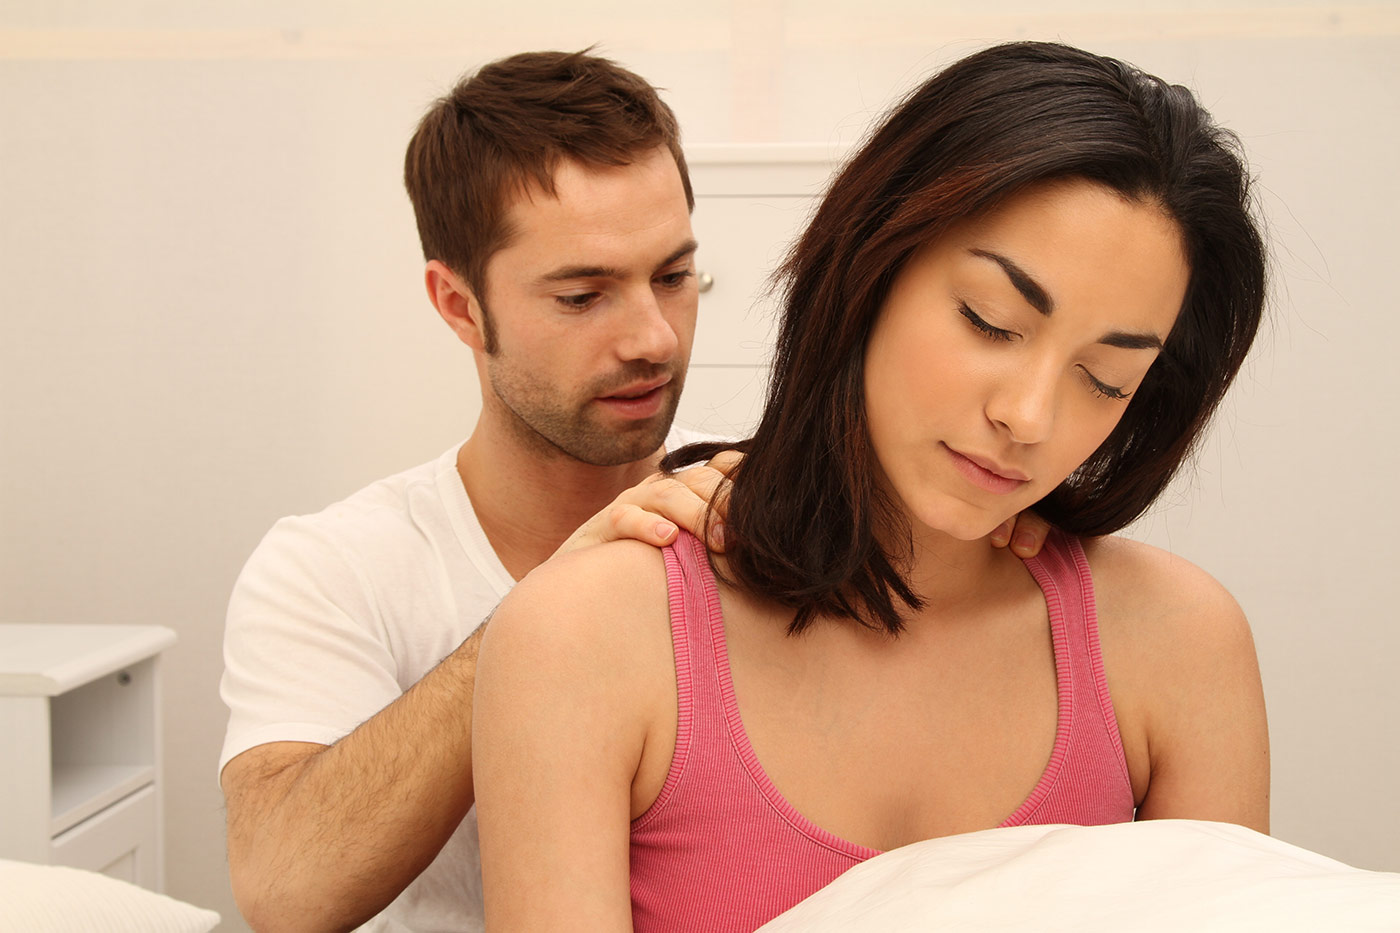 Massage Zuhause -- Partnermassage